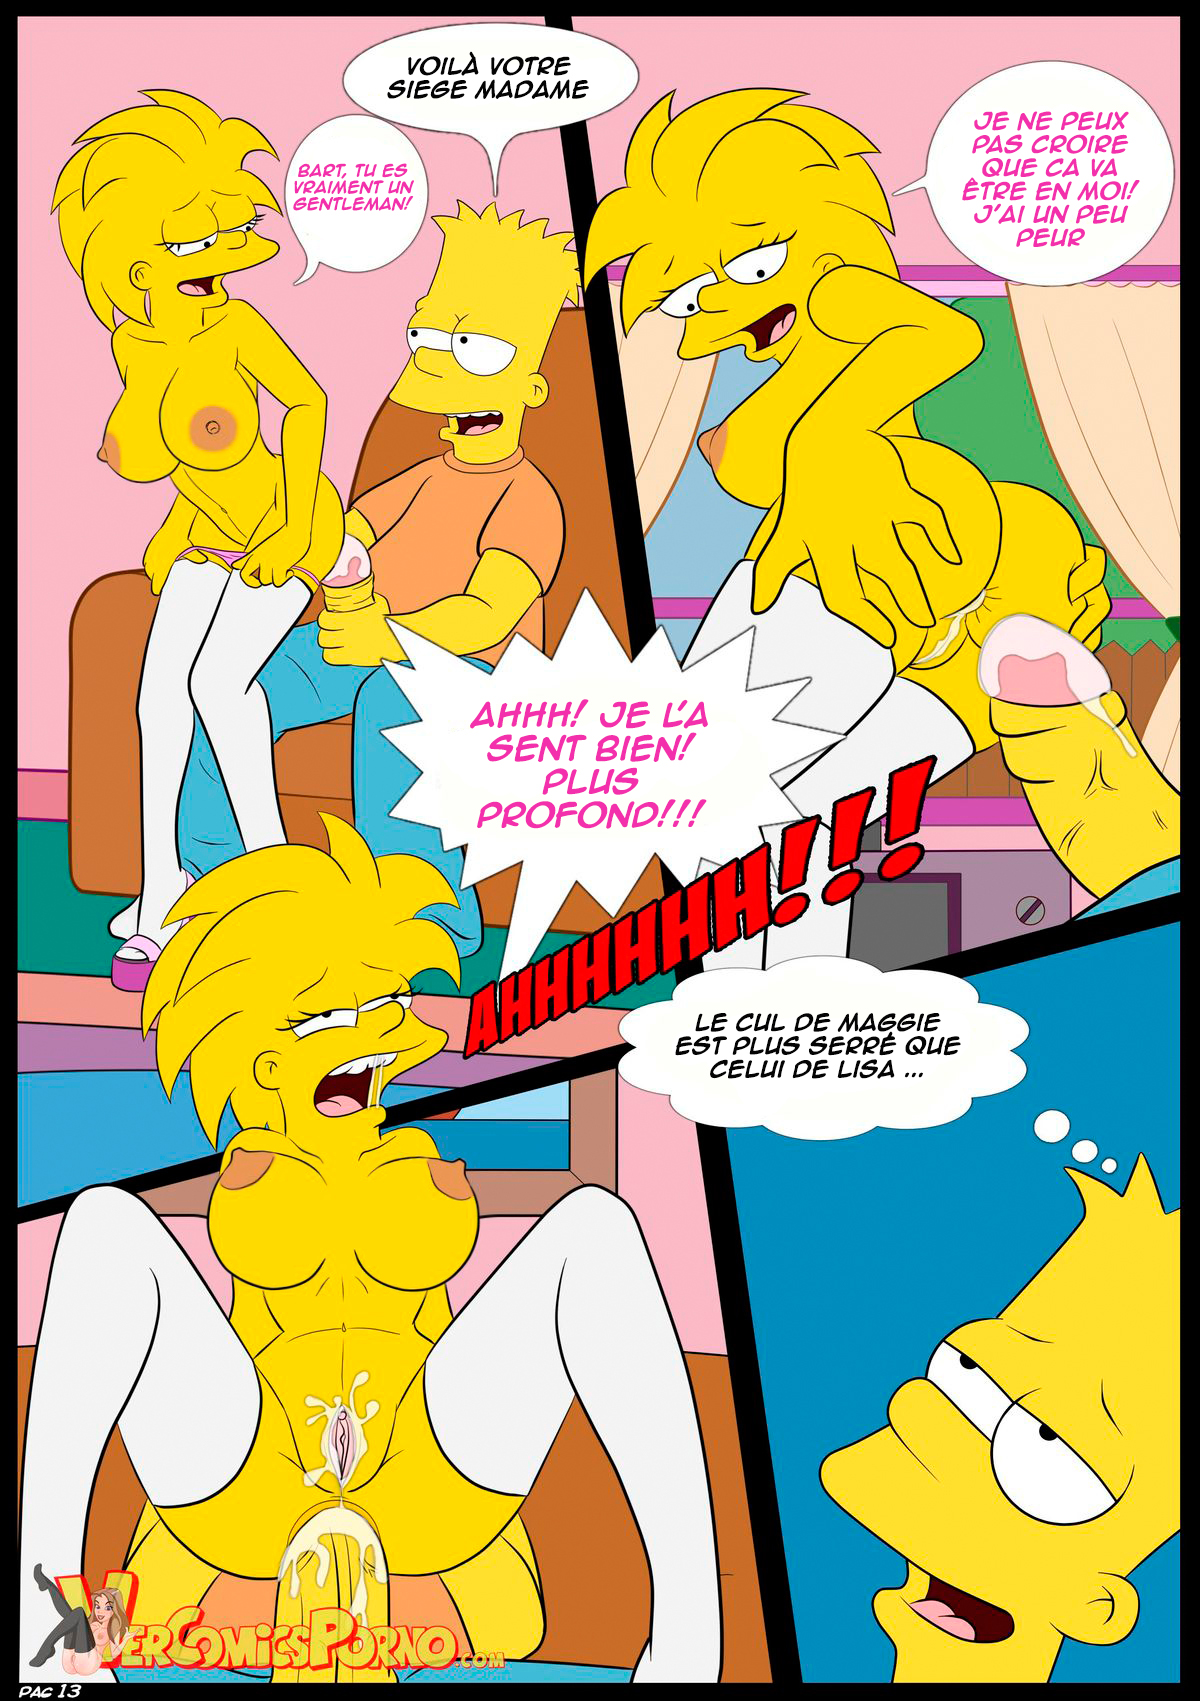 Los-Simpsons-Viejas-Costumbres.2-La-seduccion-FRE-page13--Gotofap.tk--90468036.jpg